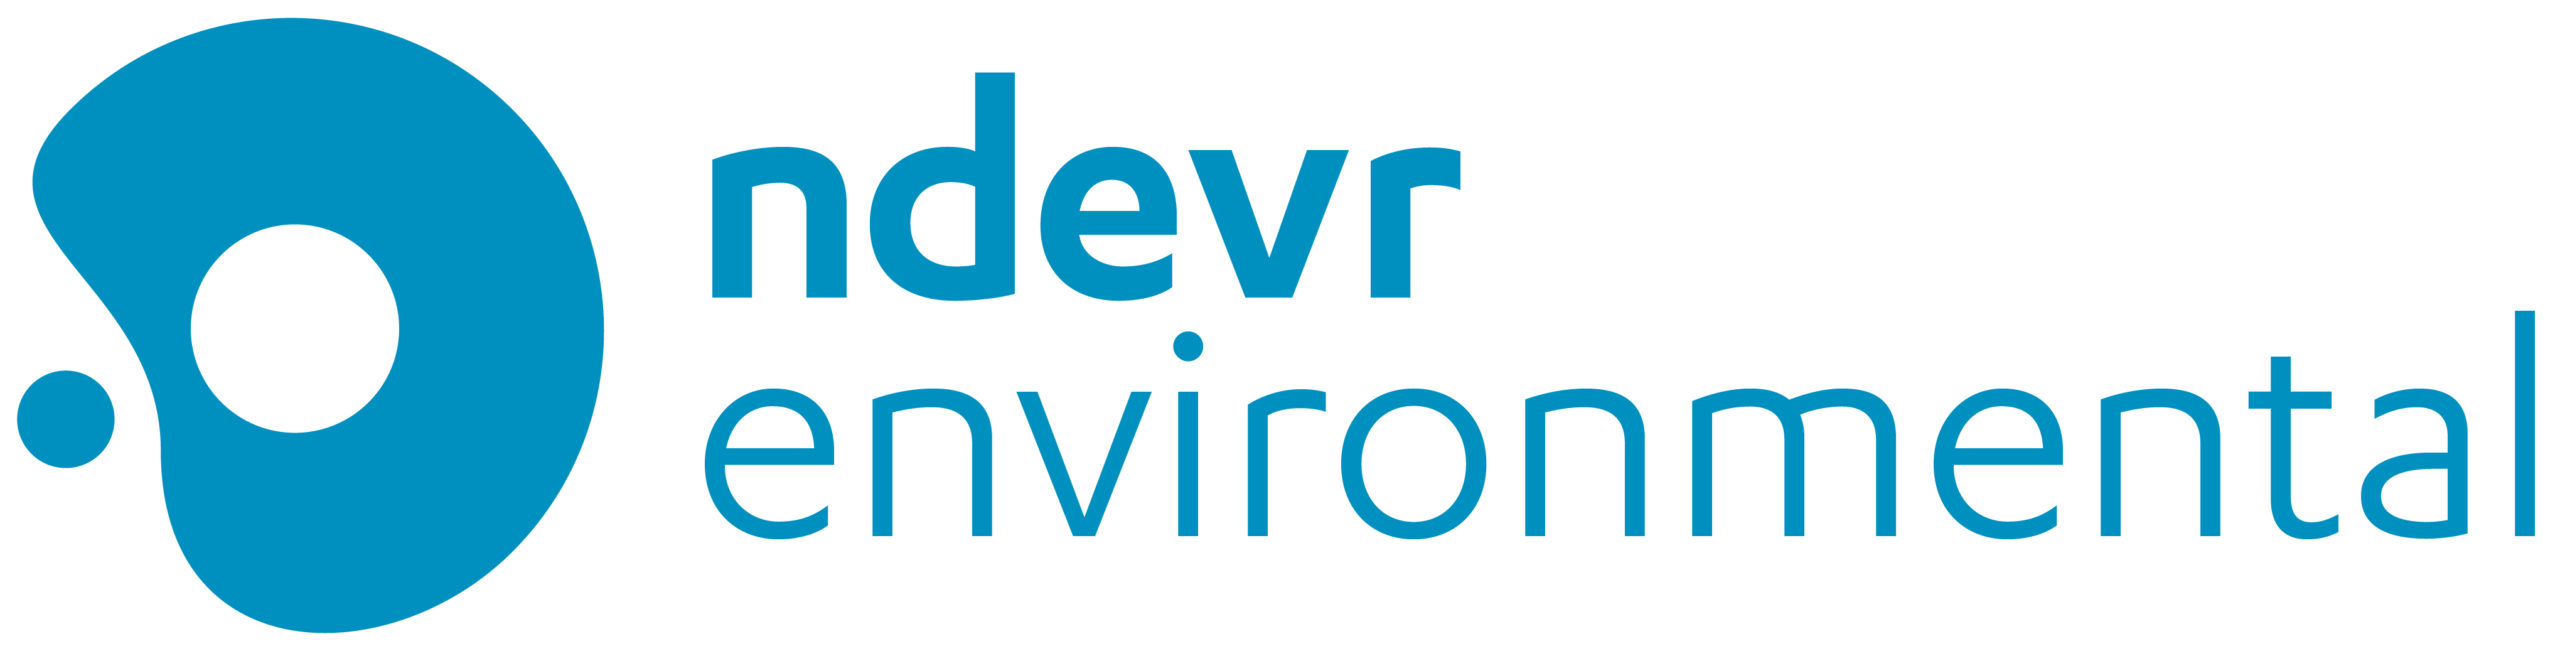 NDEVR Environmental Logo